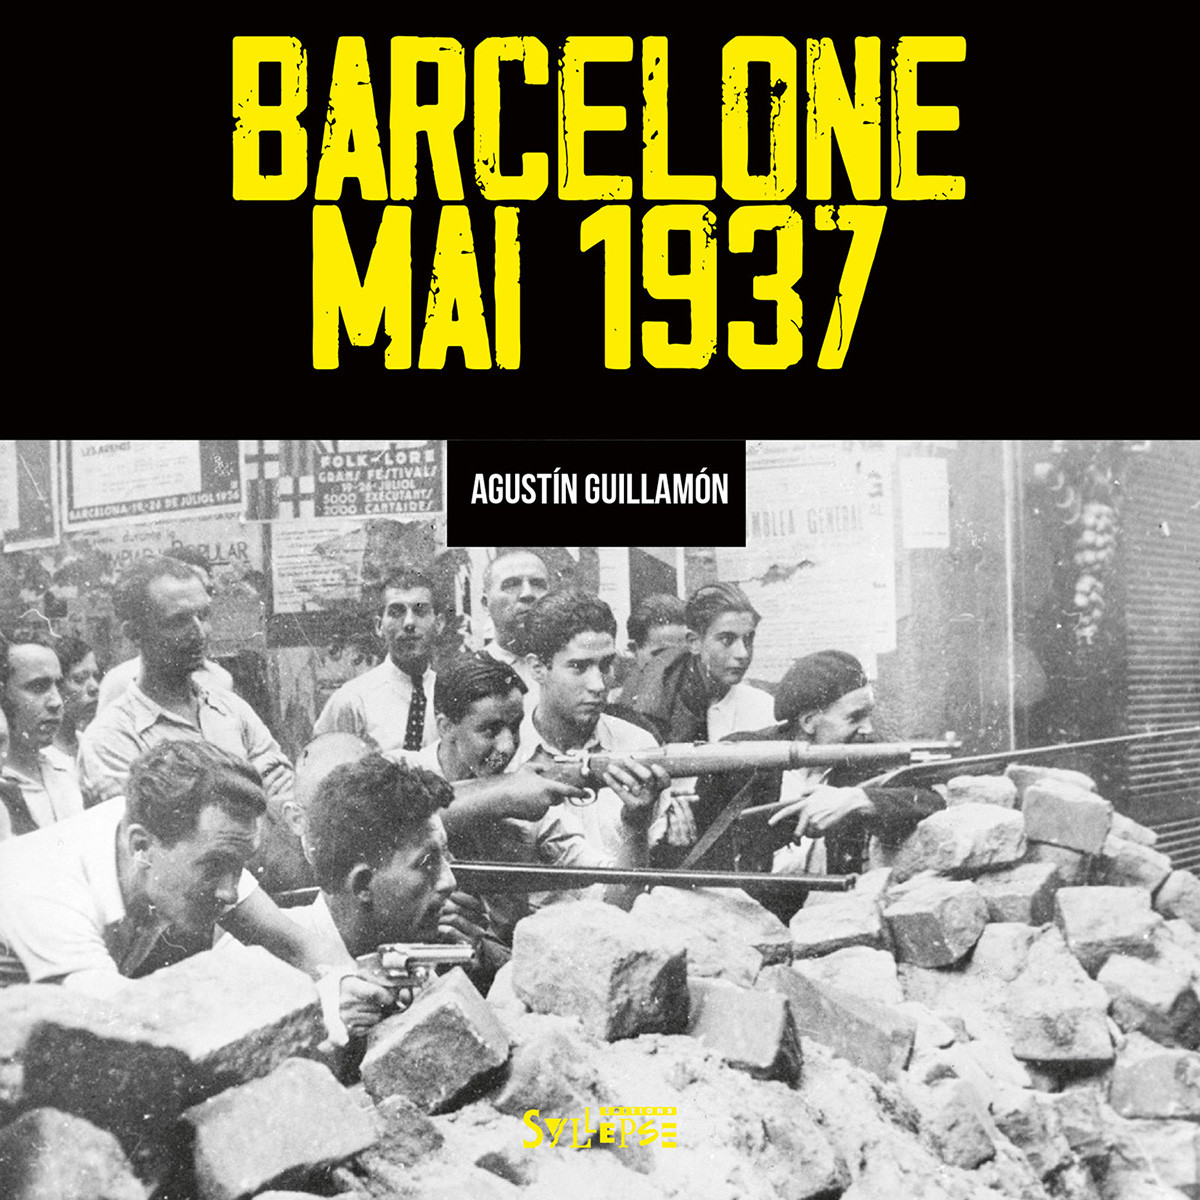 Barcelone, mai 1937 Avant-première